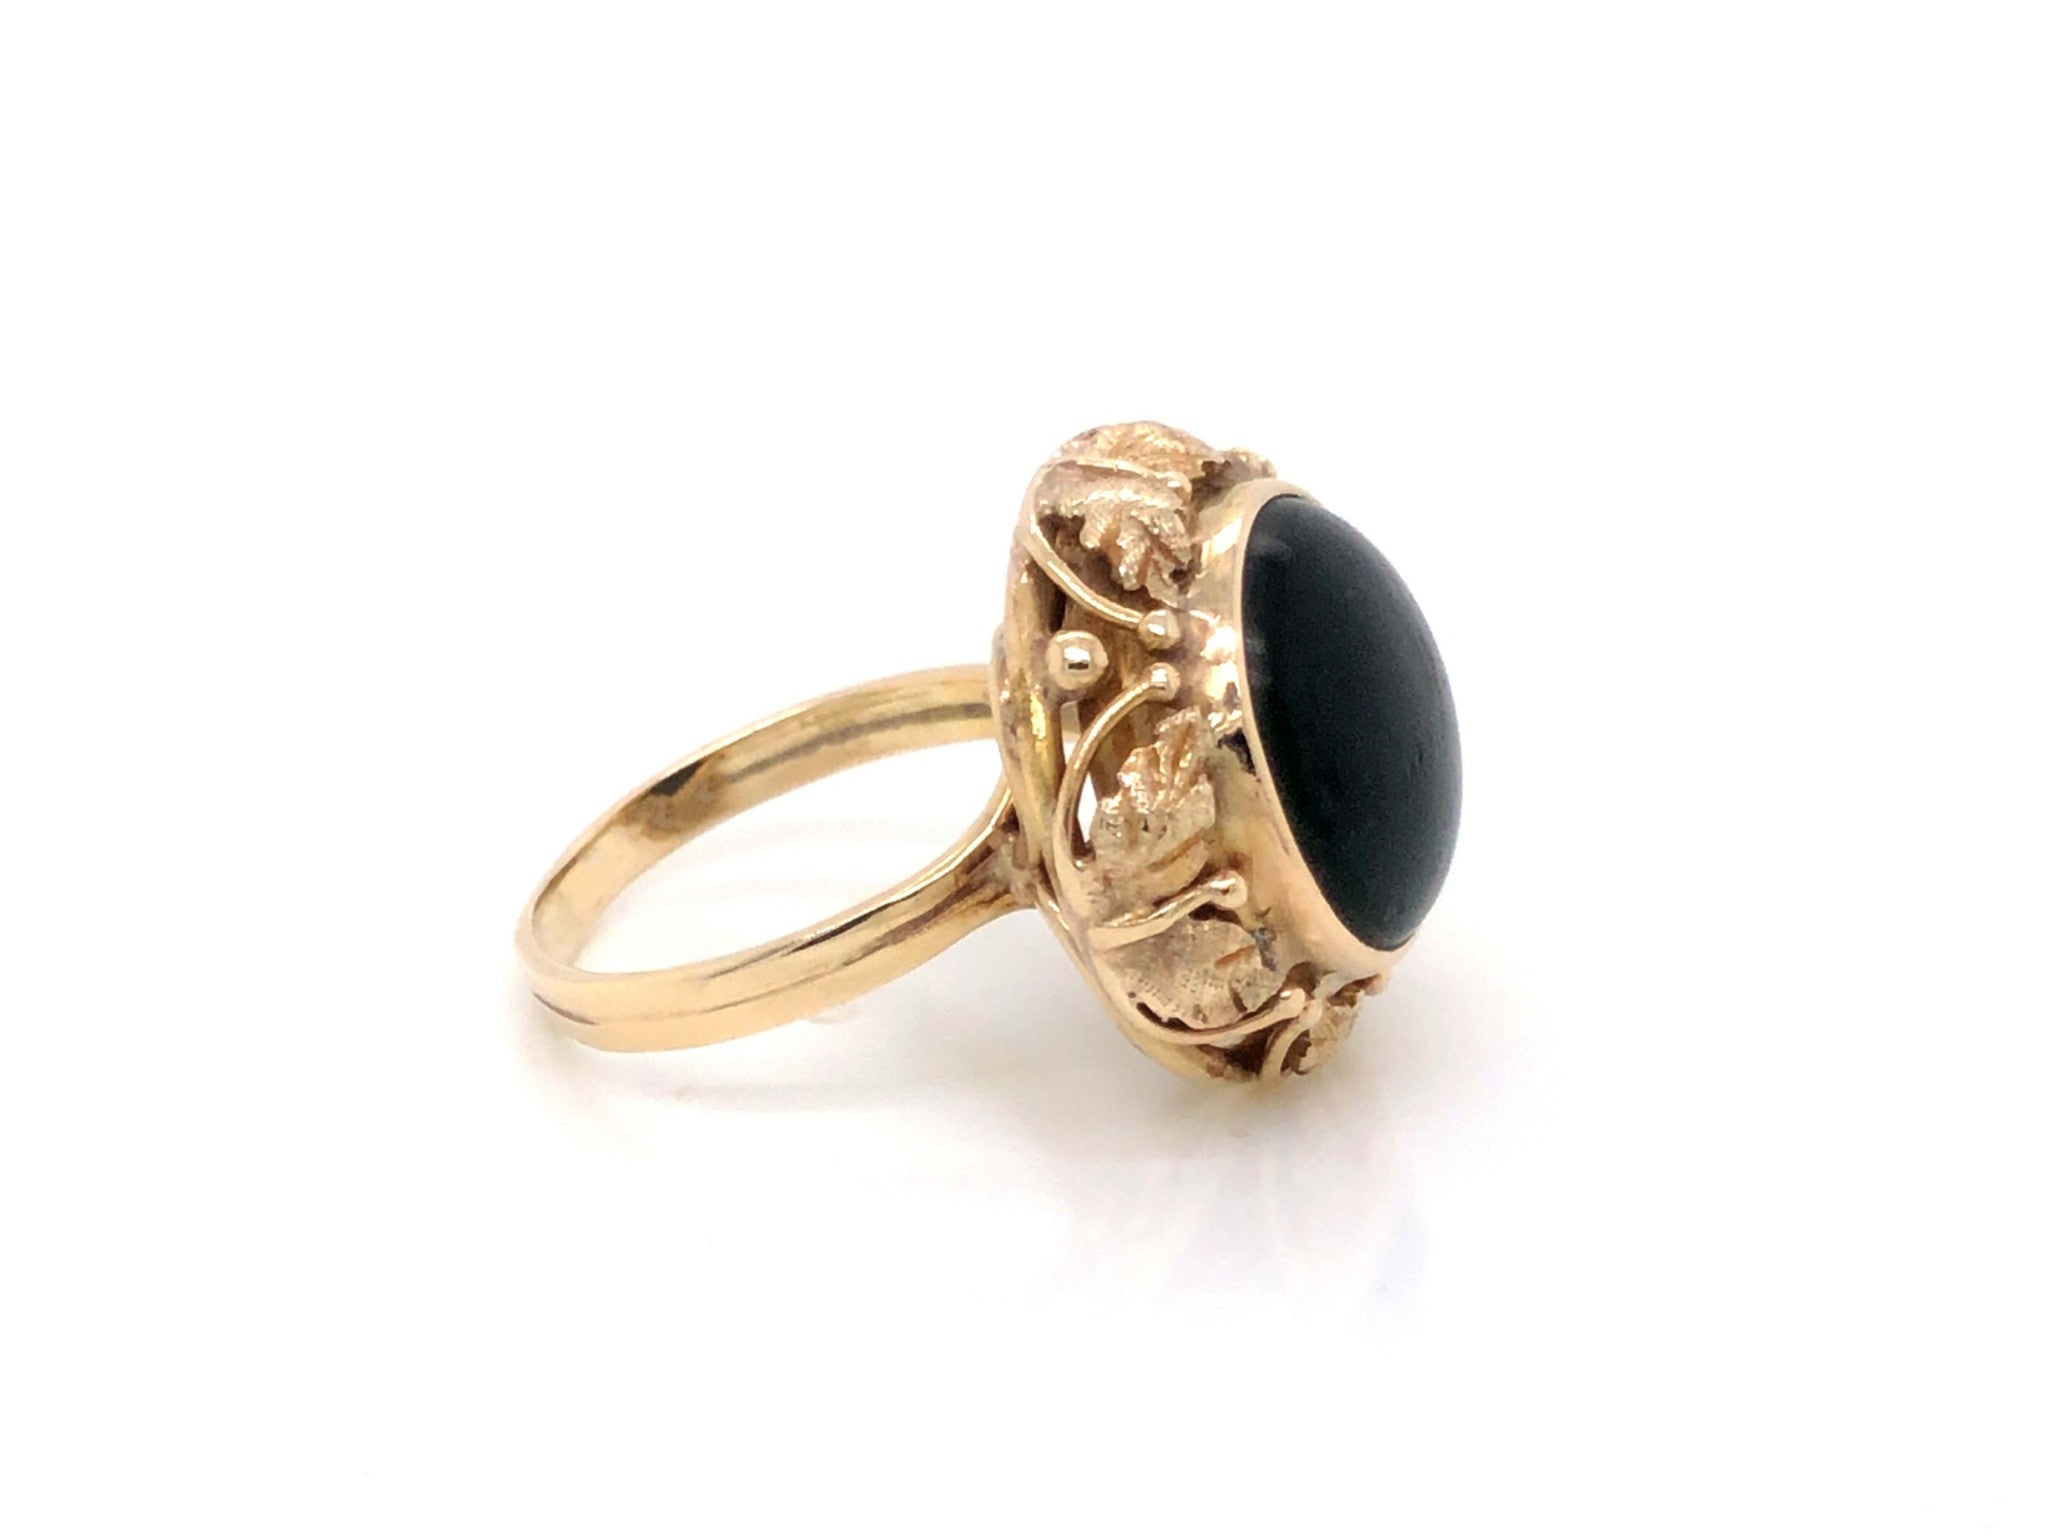 Vintage Round Black Jade Ring with Leaf Design- 14k Yellow Gold